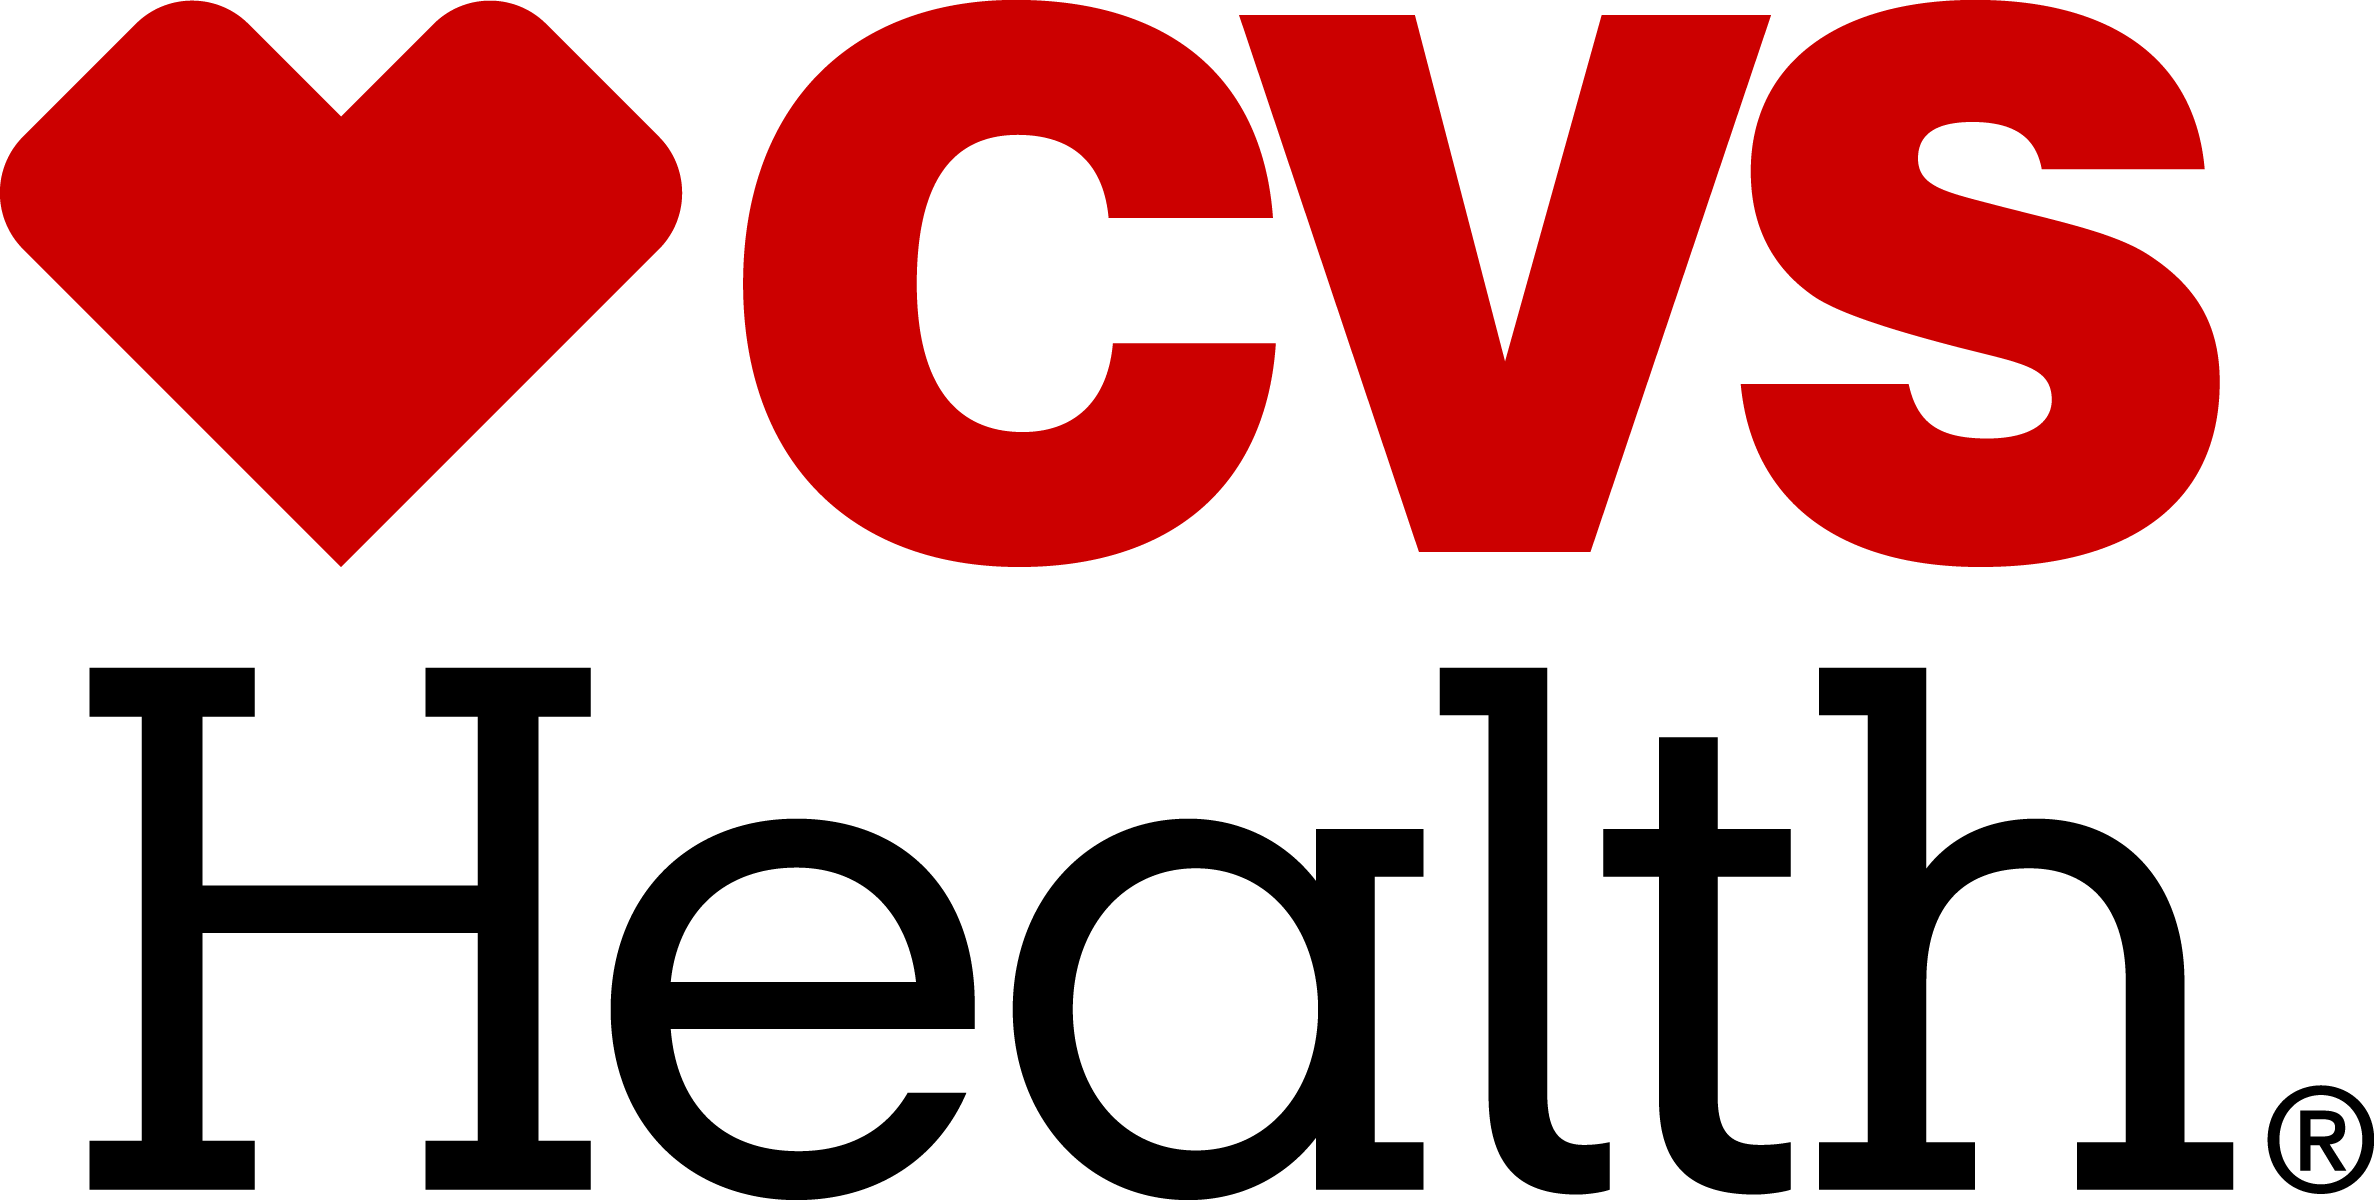 Logo CVS Health